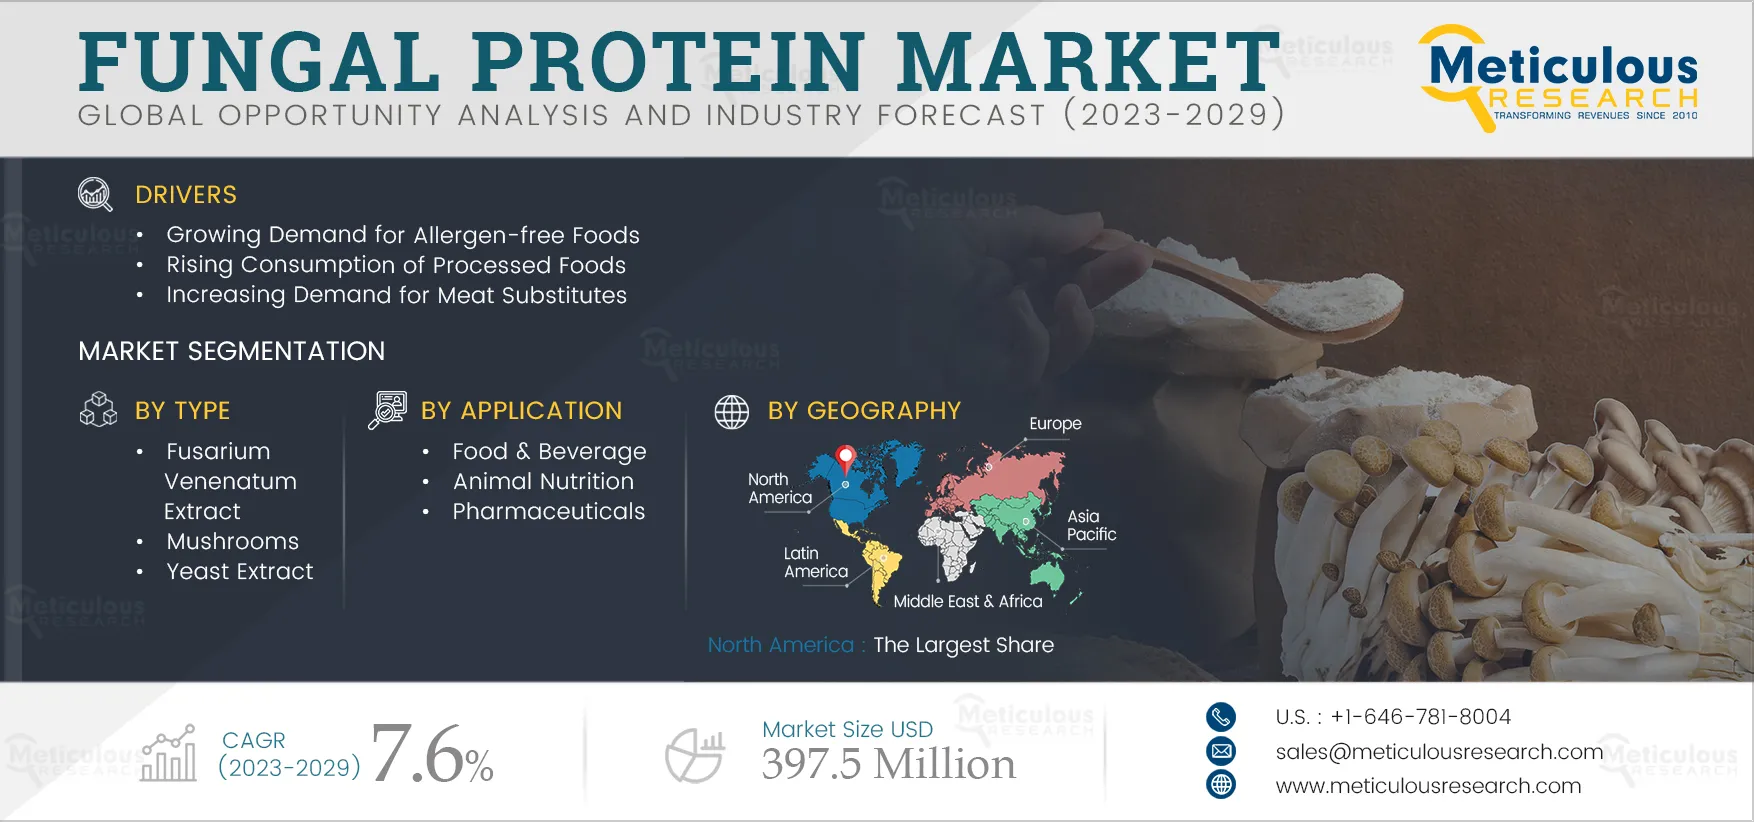 Fungal Protein Market